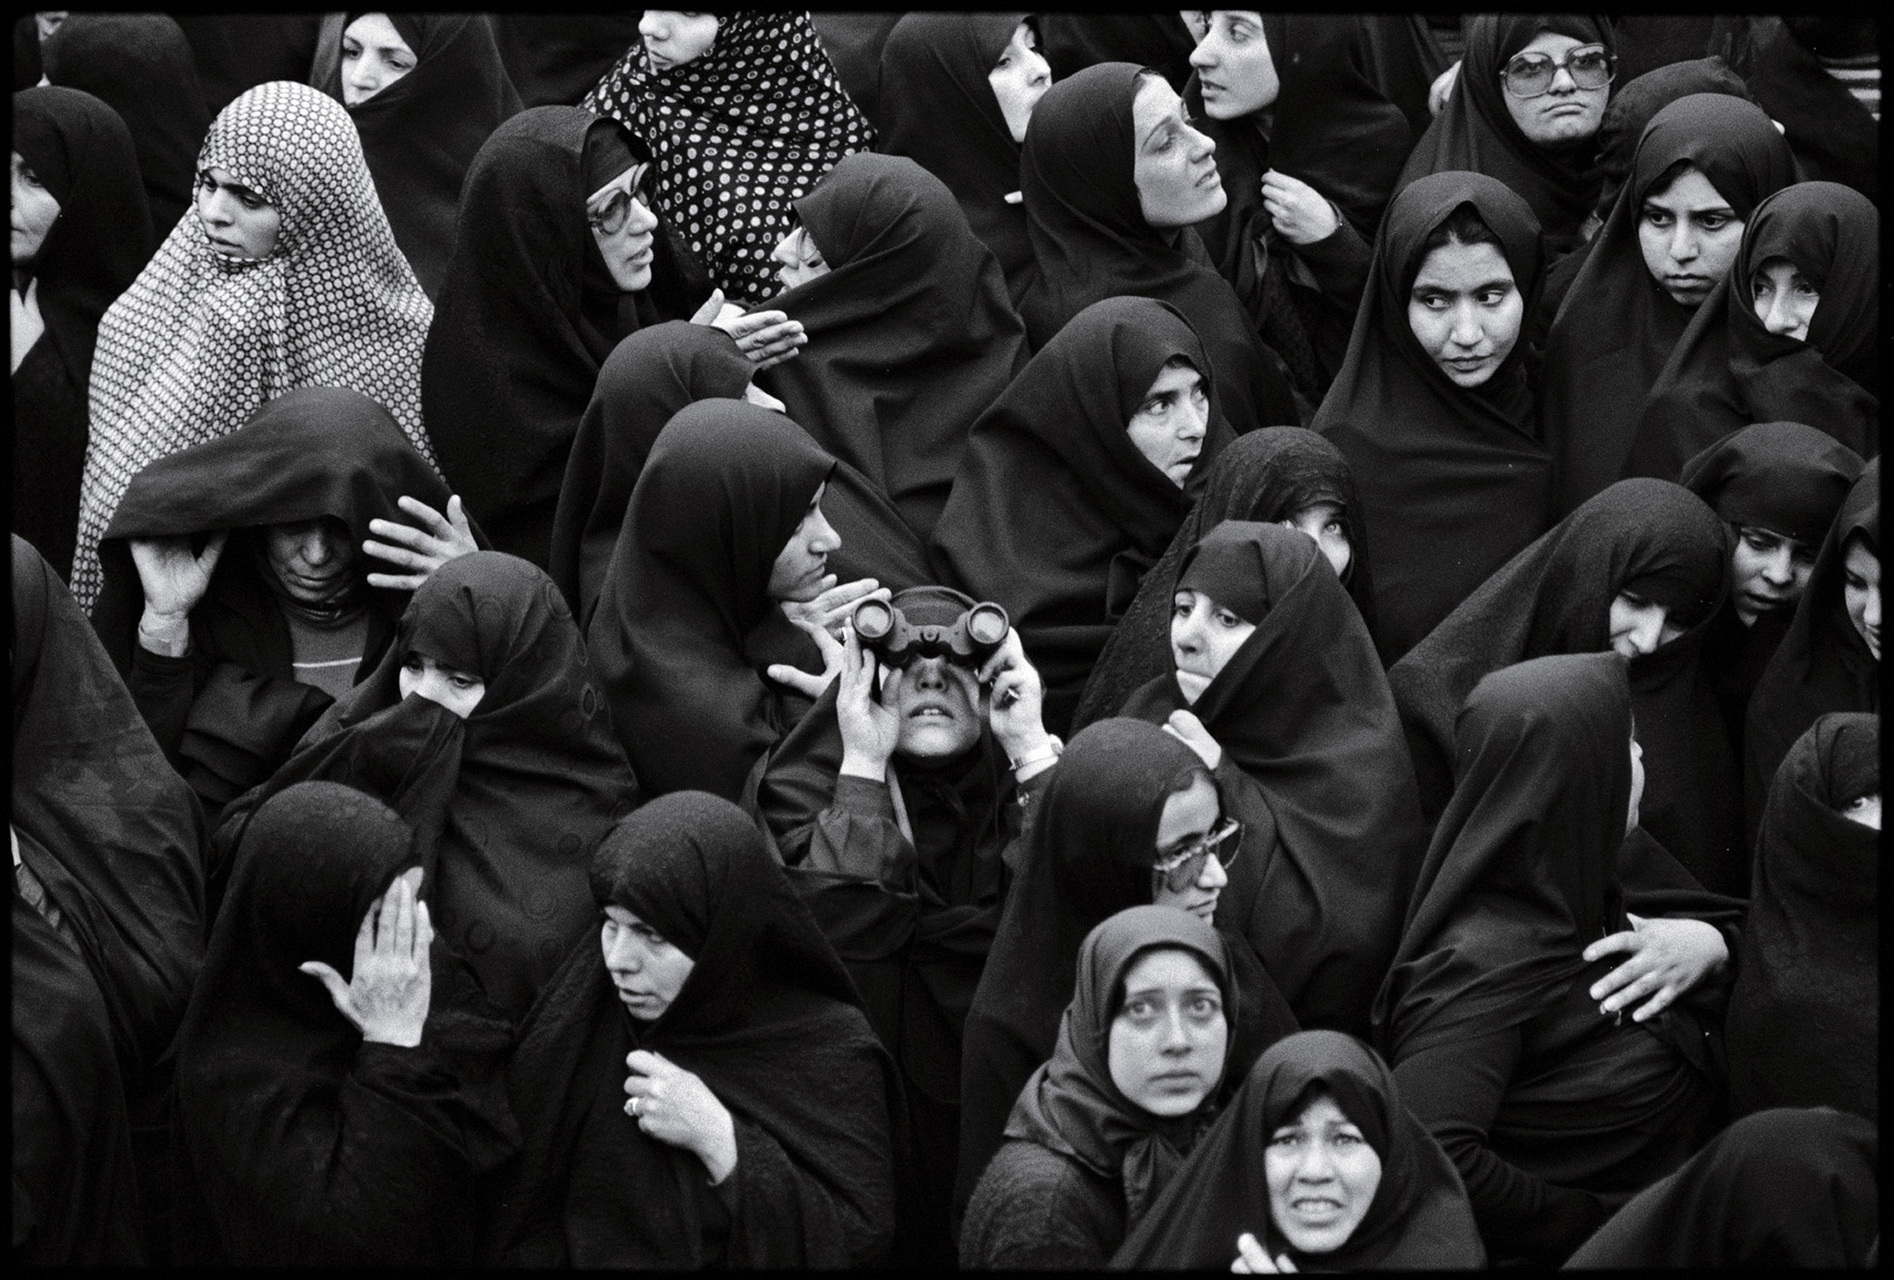  : 44 Days: the Iranian Revolution : David Burnett | Photographer